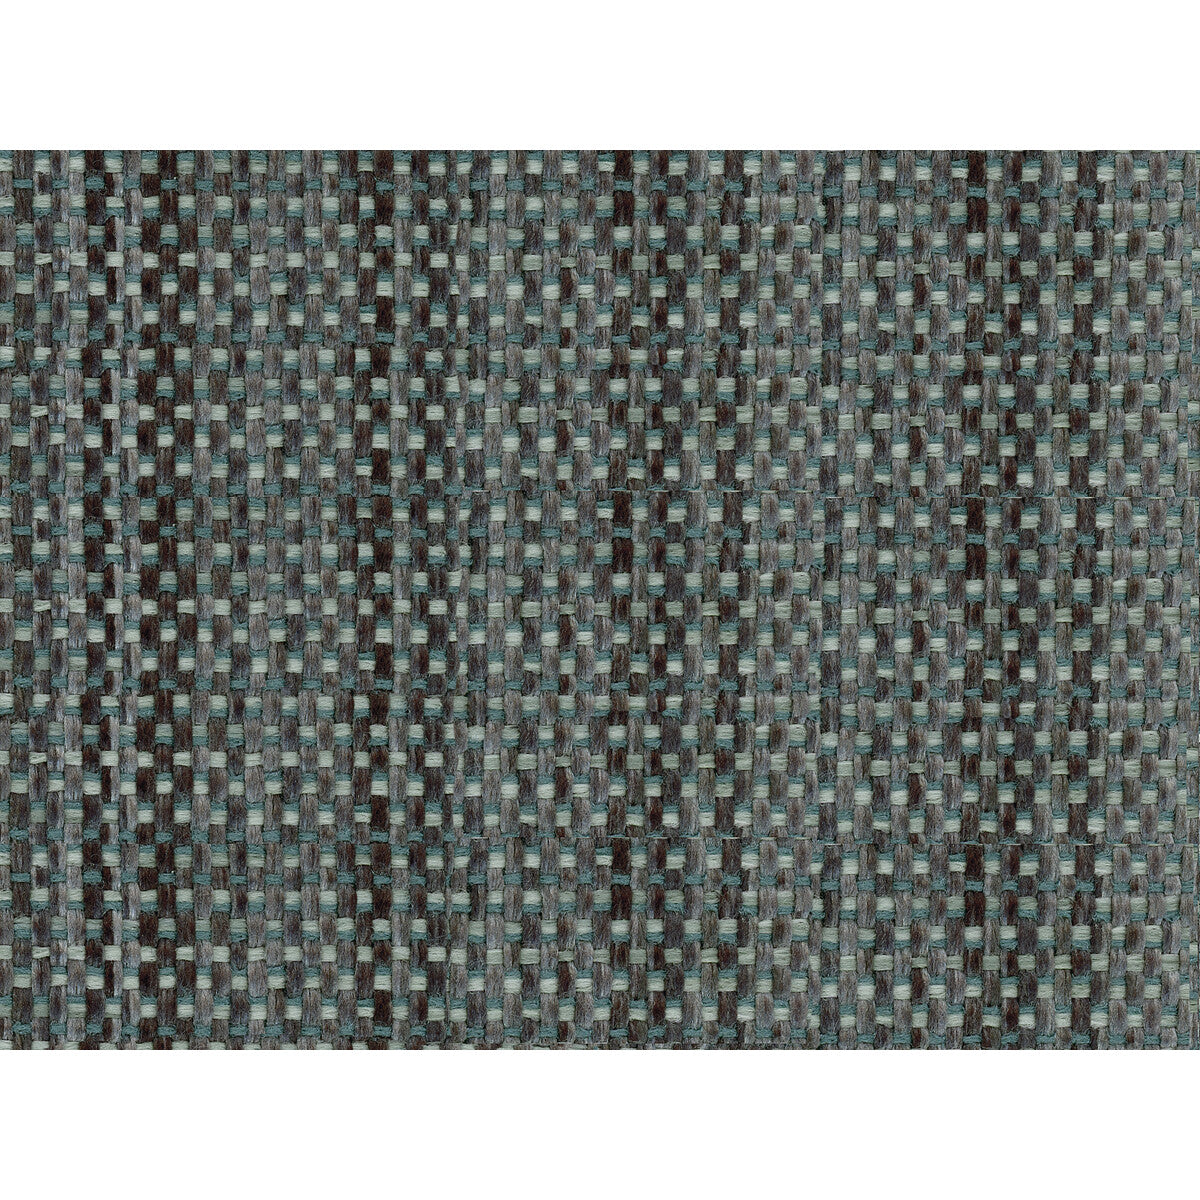 Kravet Smart fabric in 34342-515 color - pattern 34342.515.0 - by Kravet Smart